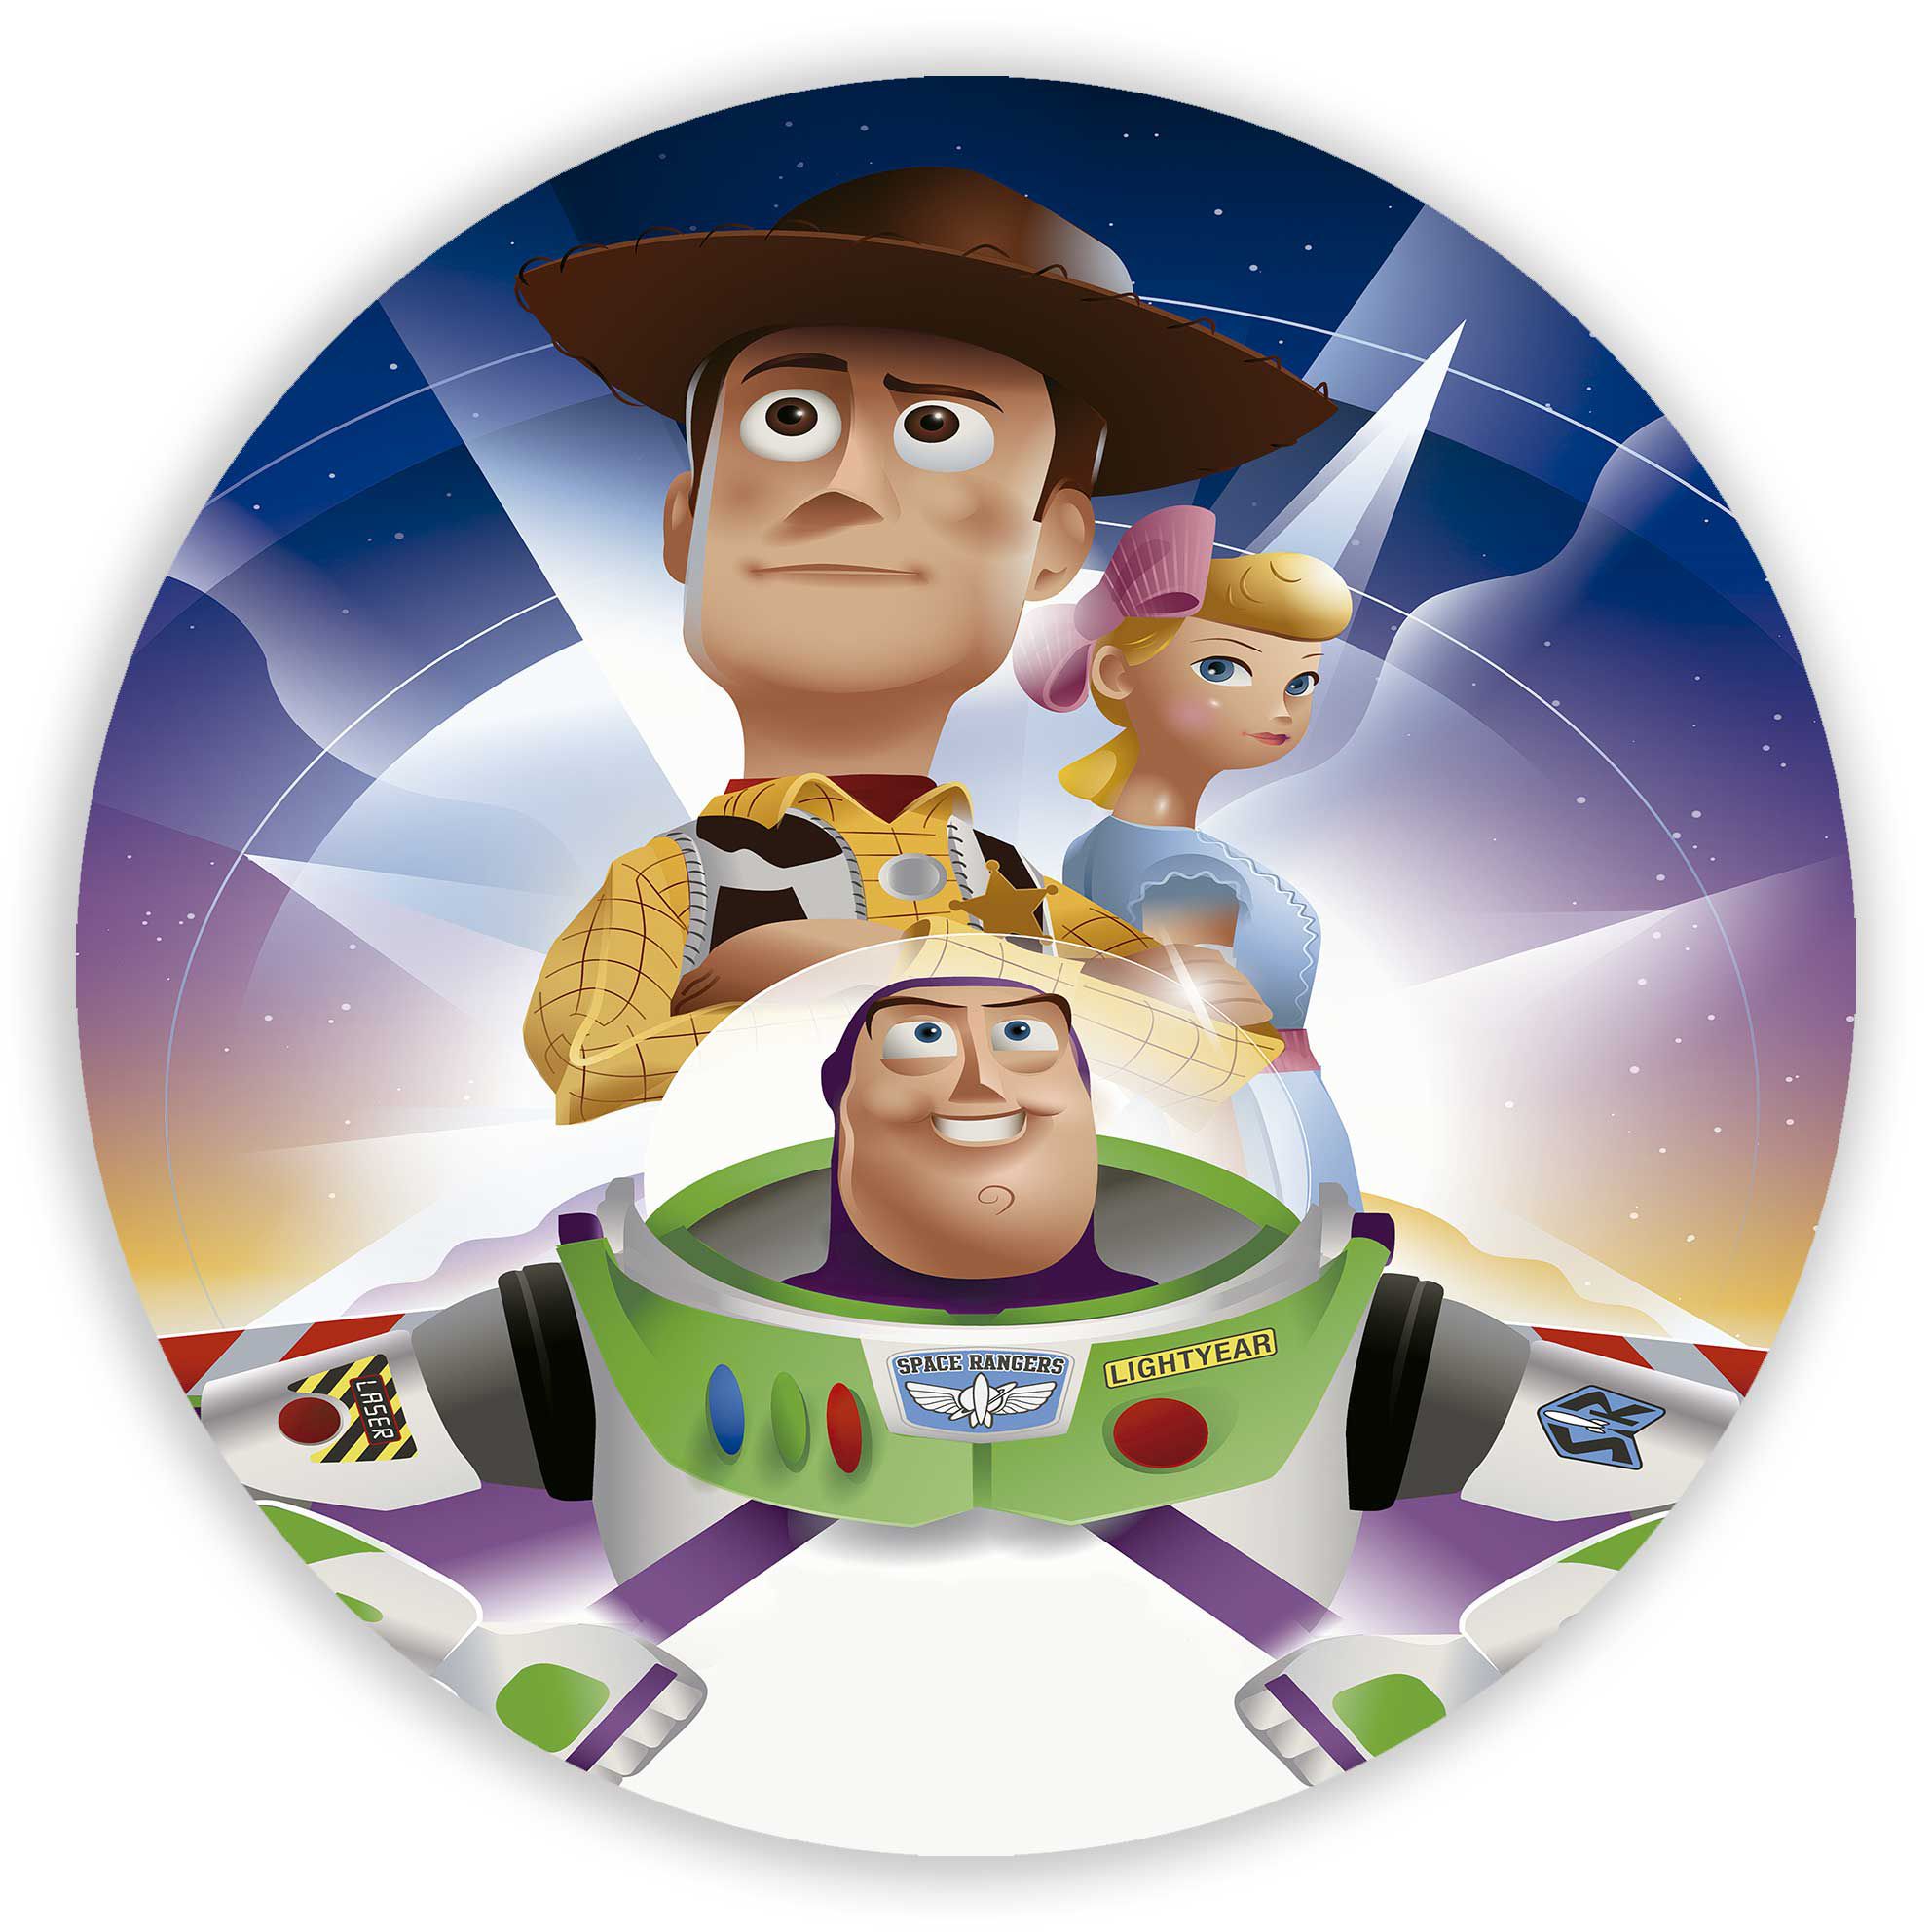 Painel Redondo - Toy Story - Sublimado 3D - Sublitex, painéis sublimados